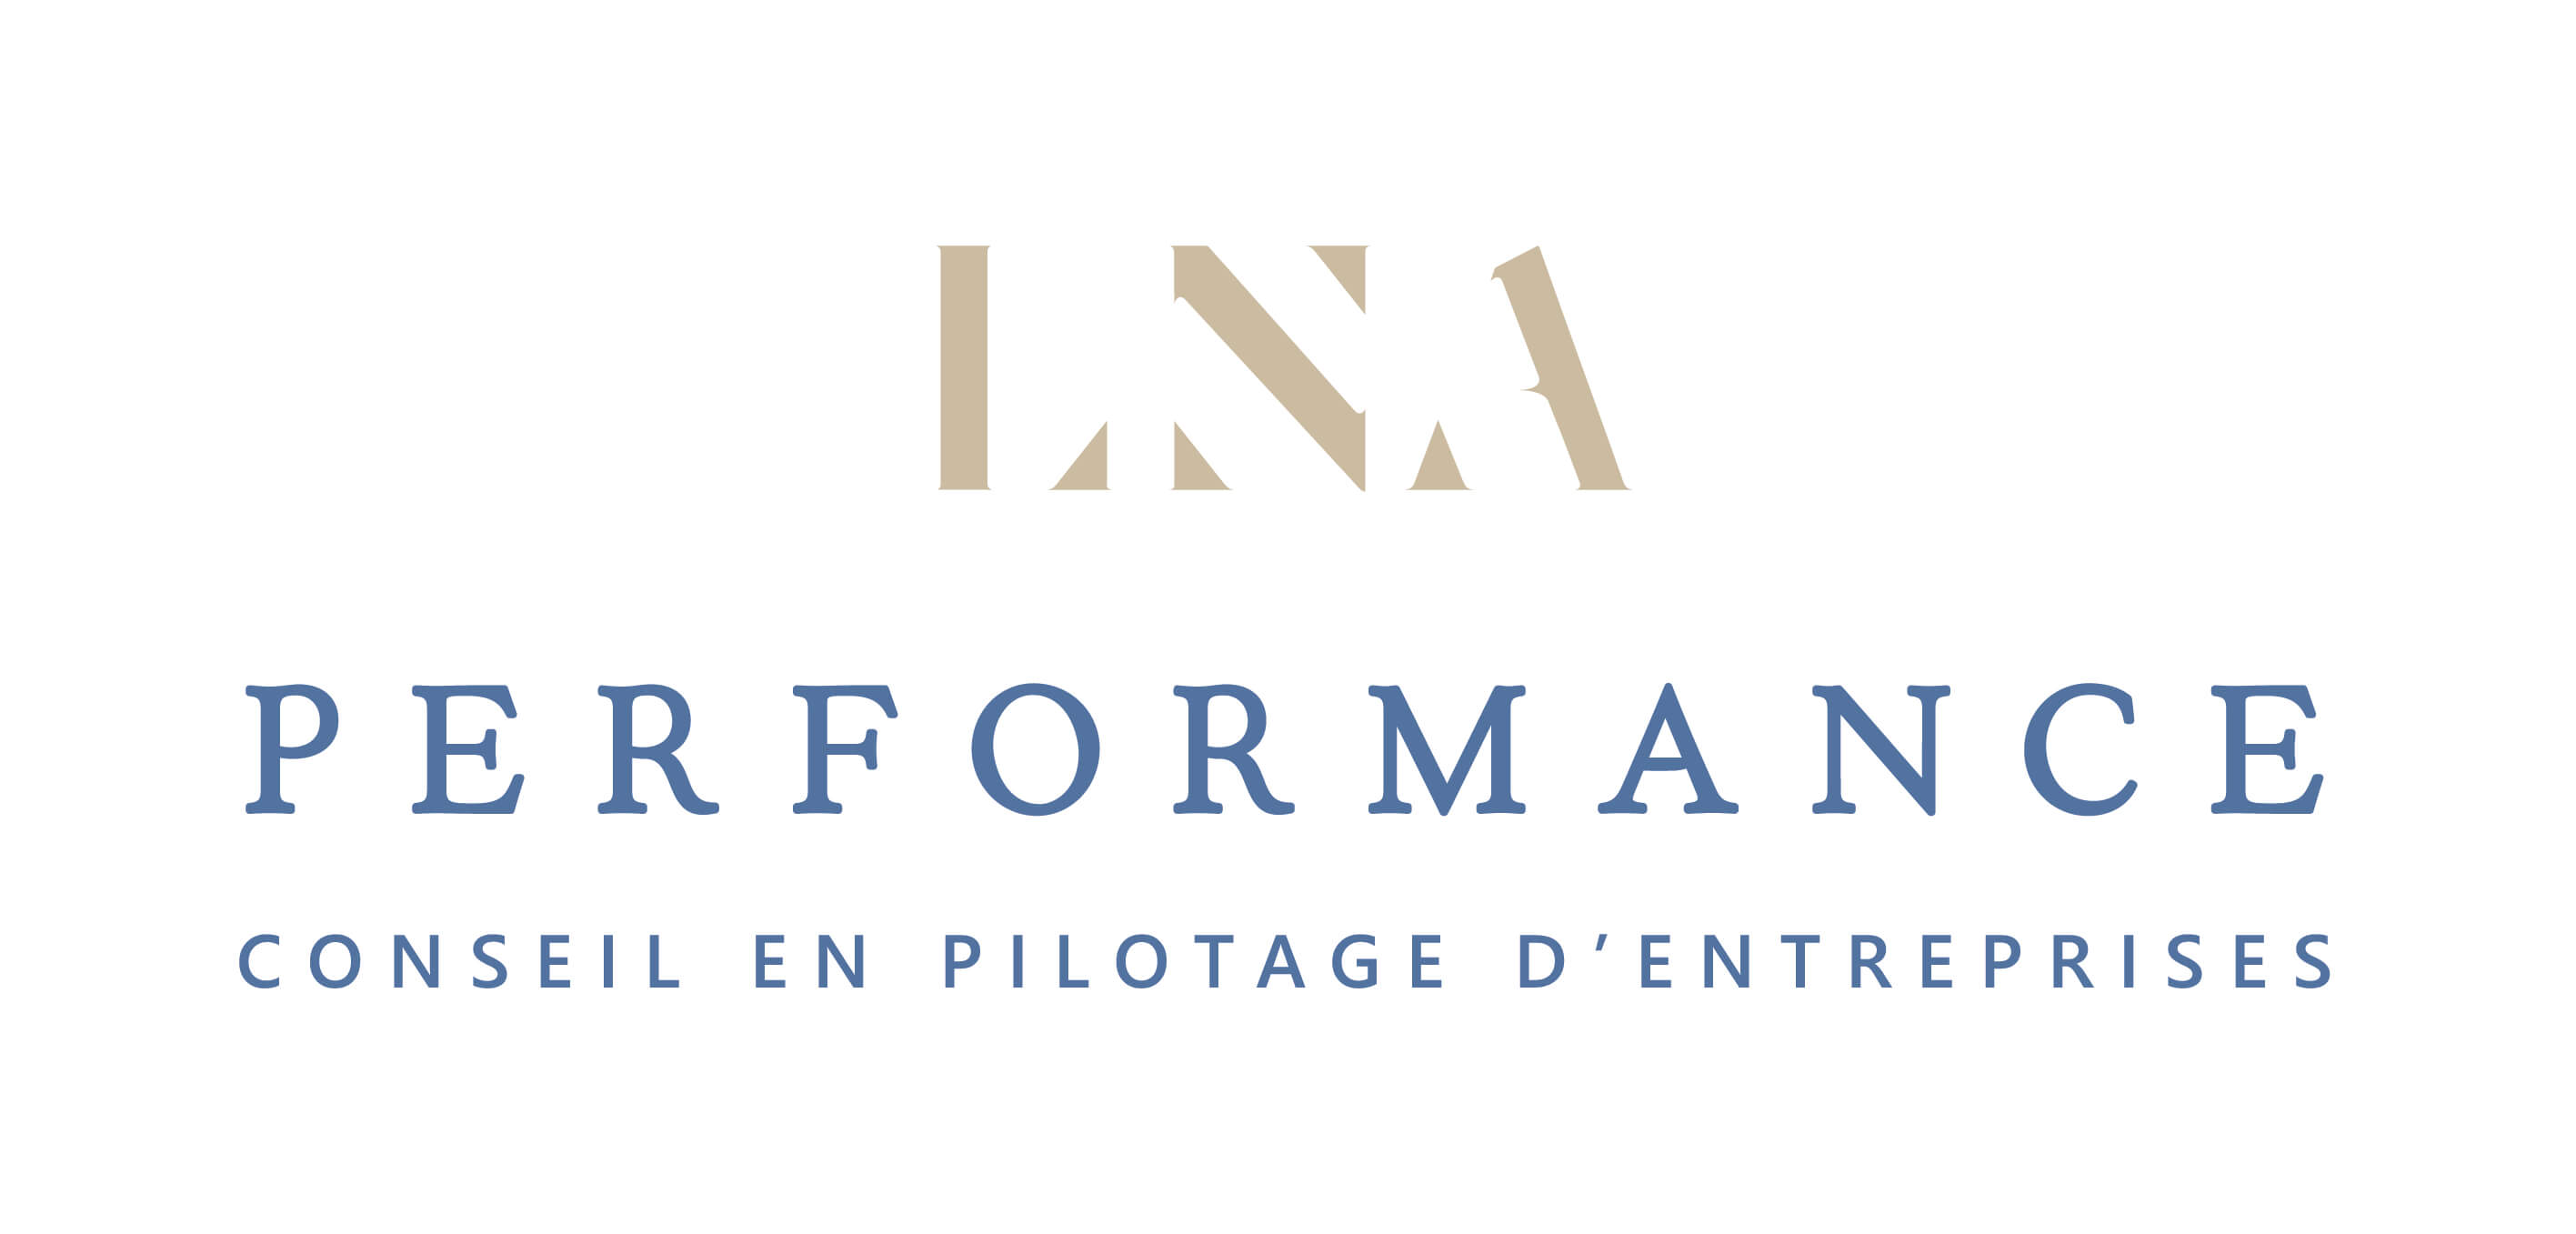 LNA Performance 